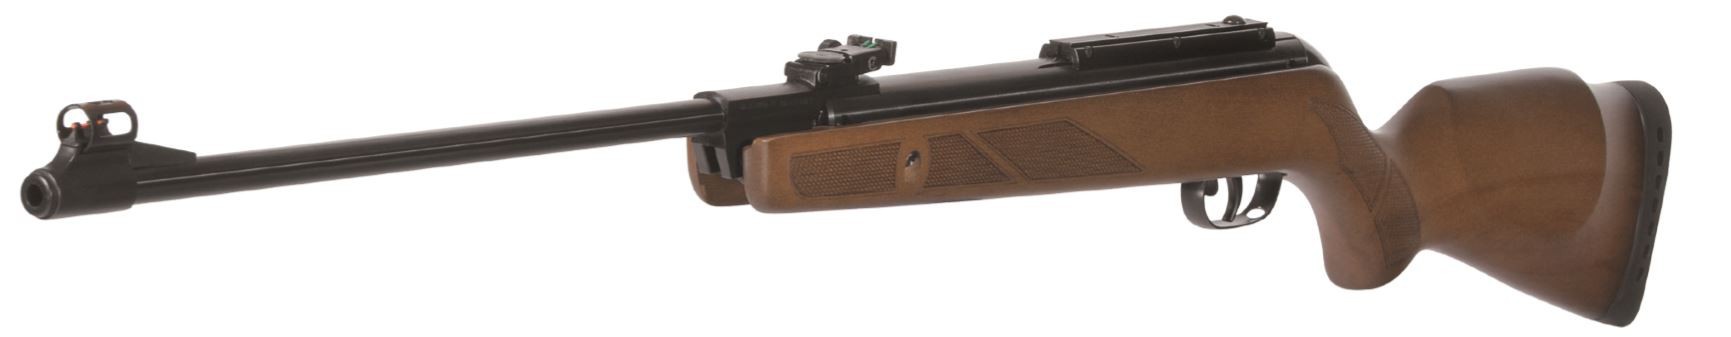 Rifle Perdigones Gamo HUNTER 440 6.35 Madera